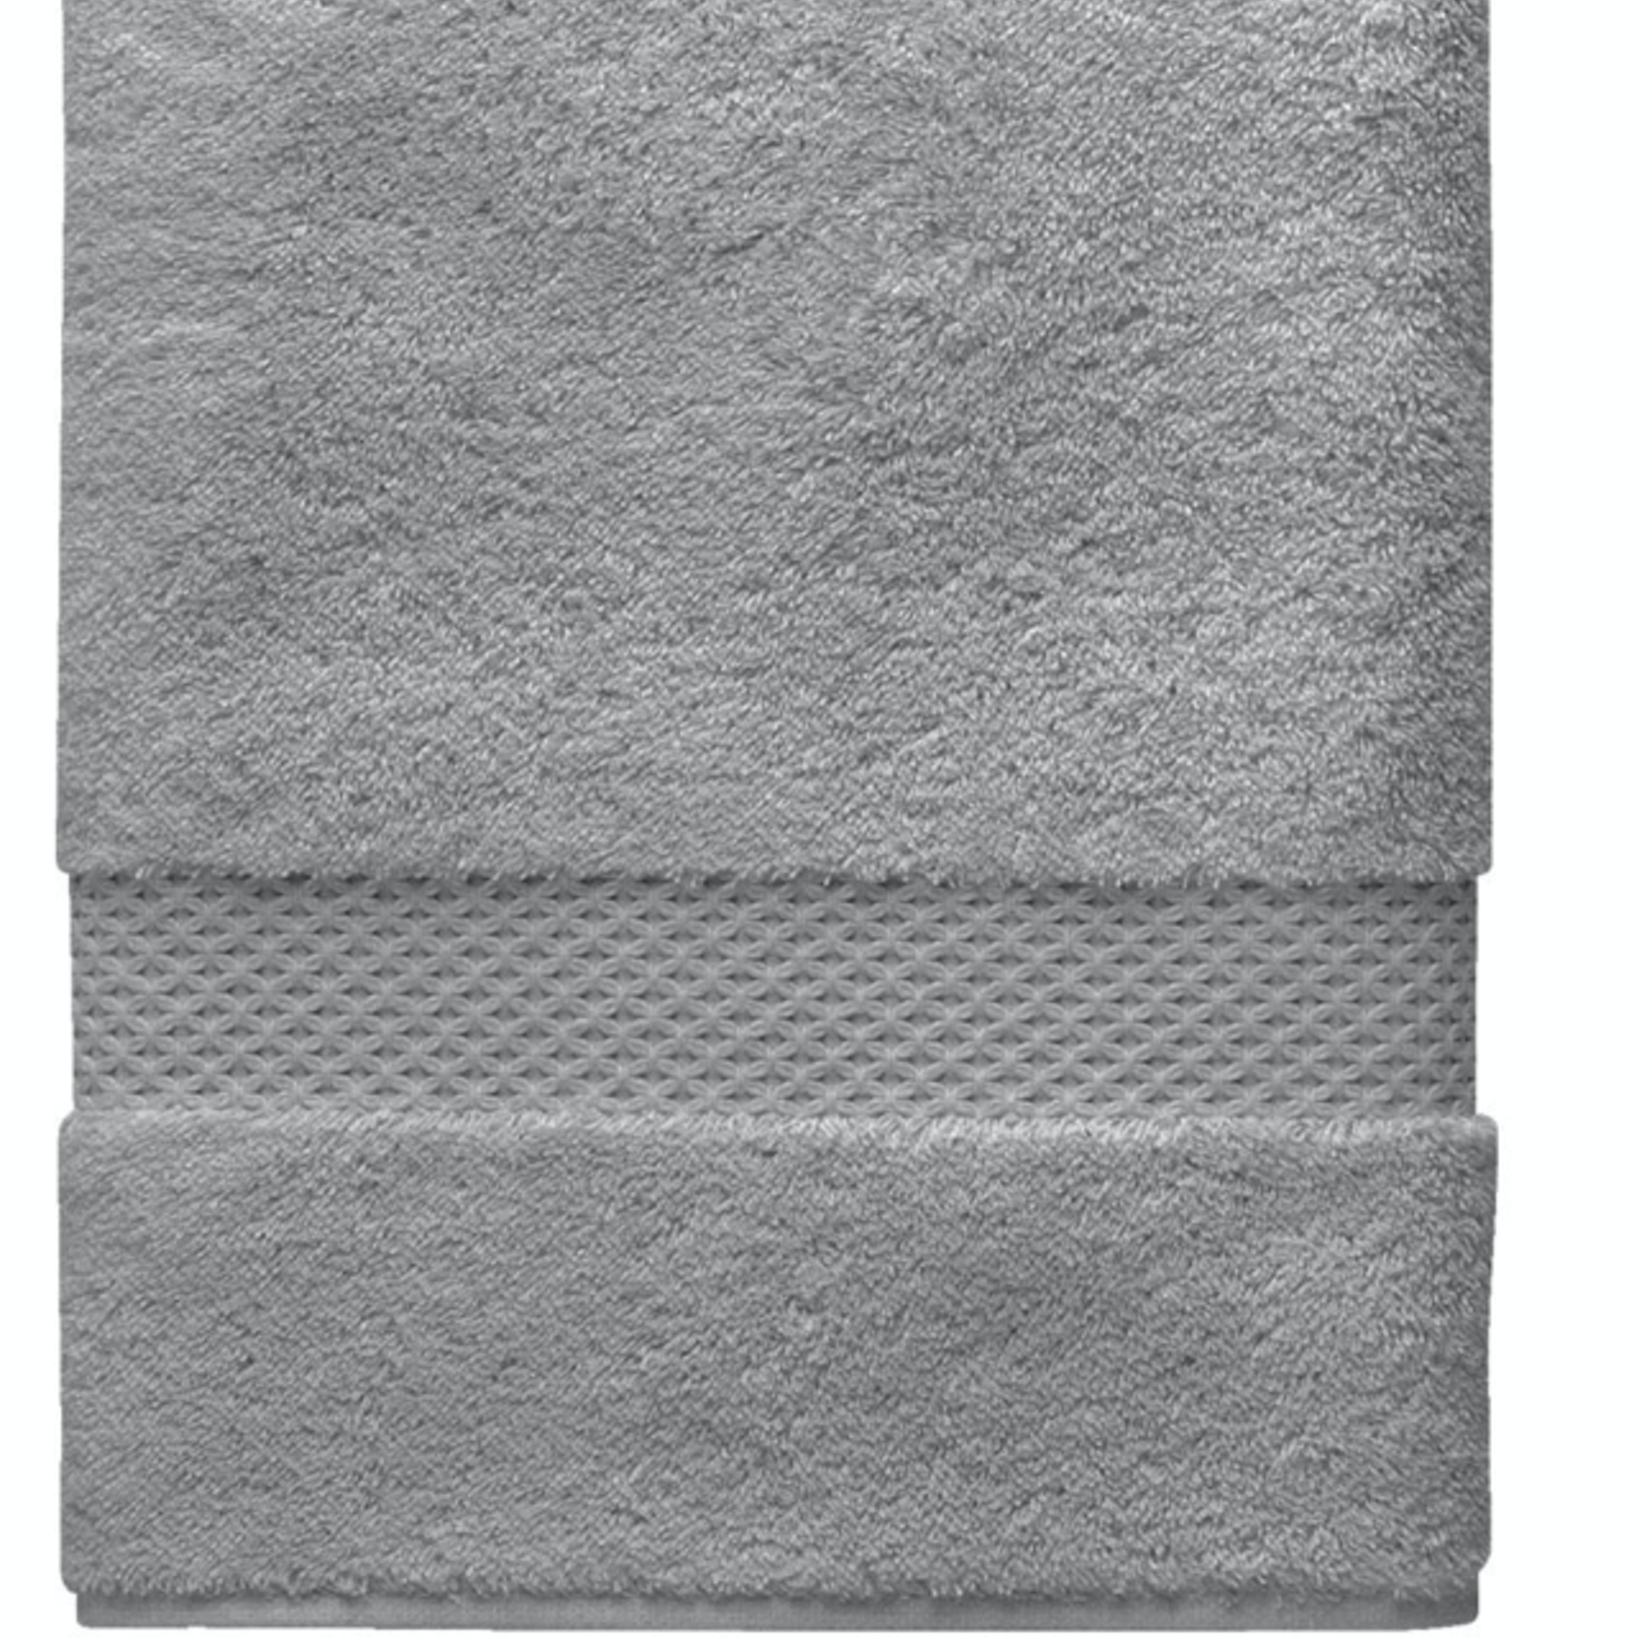 ETOILE (83% cotton, 17% modal) Hand Towel